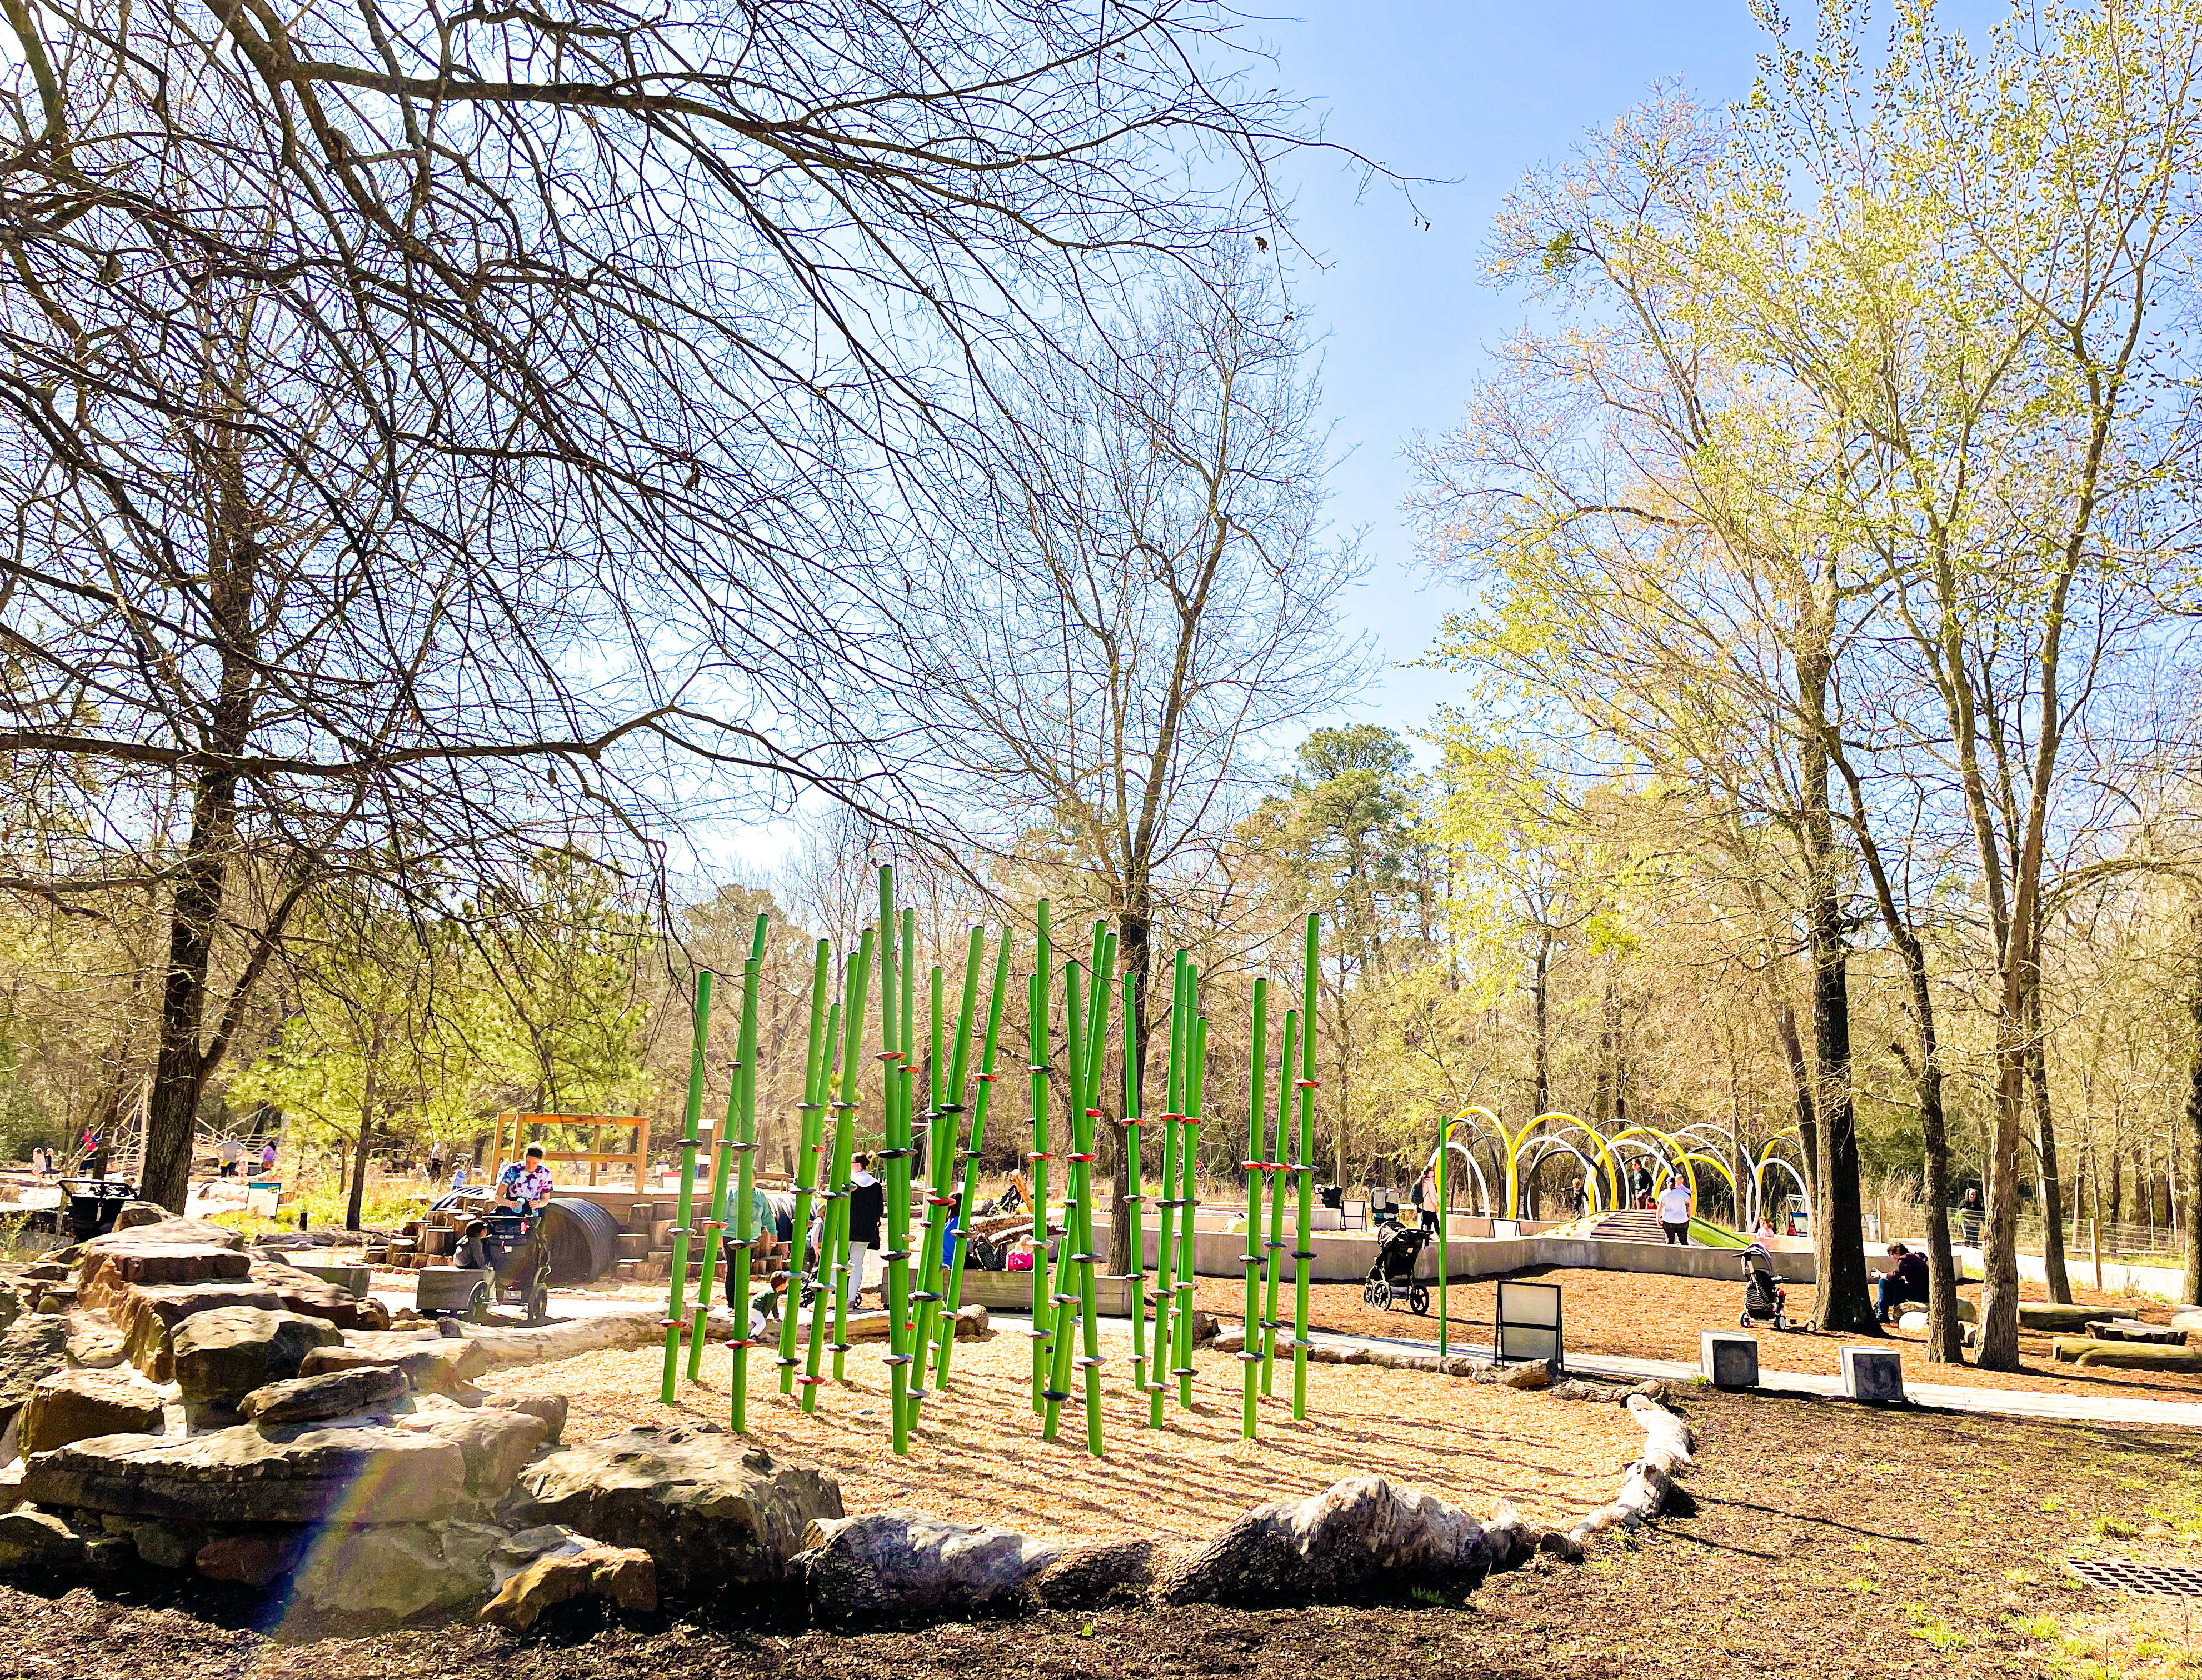 The Nature Playscape at Houston Arboretum